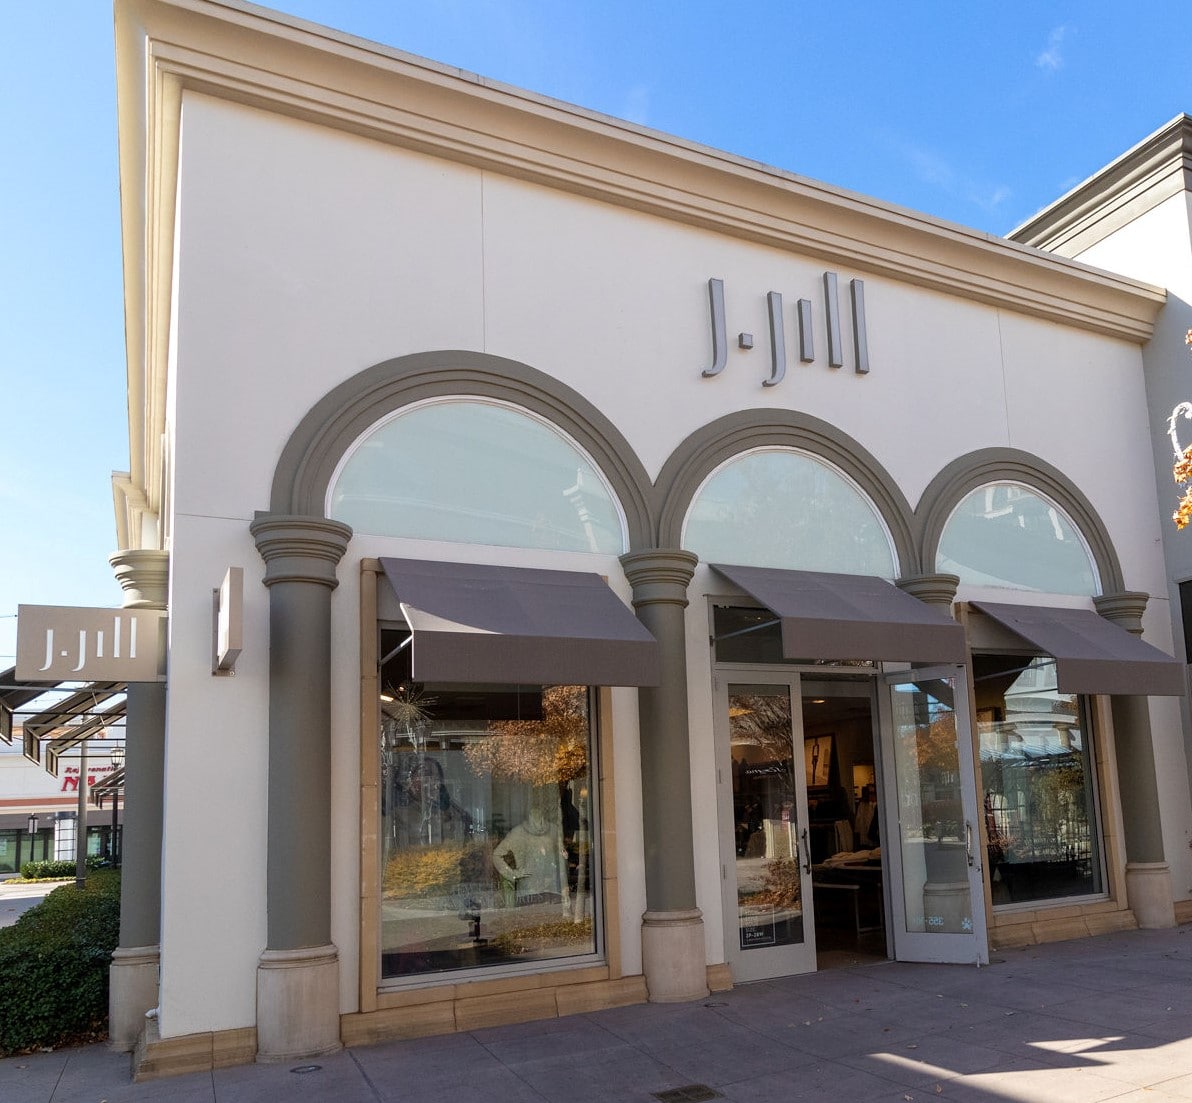 J. Jill – Bridge Street Town Centre